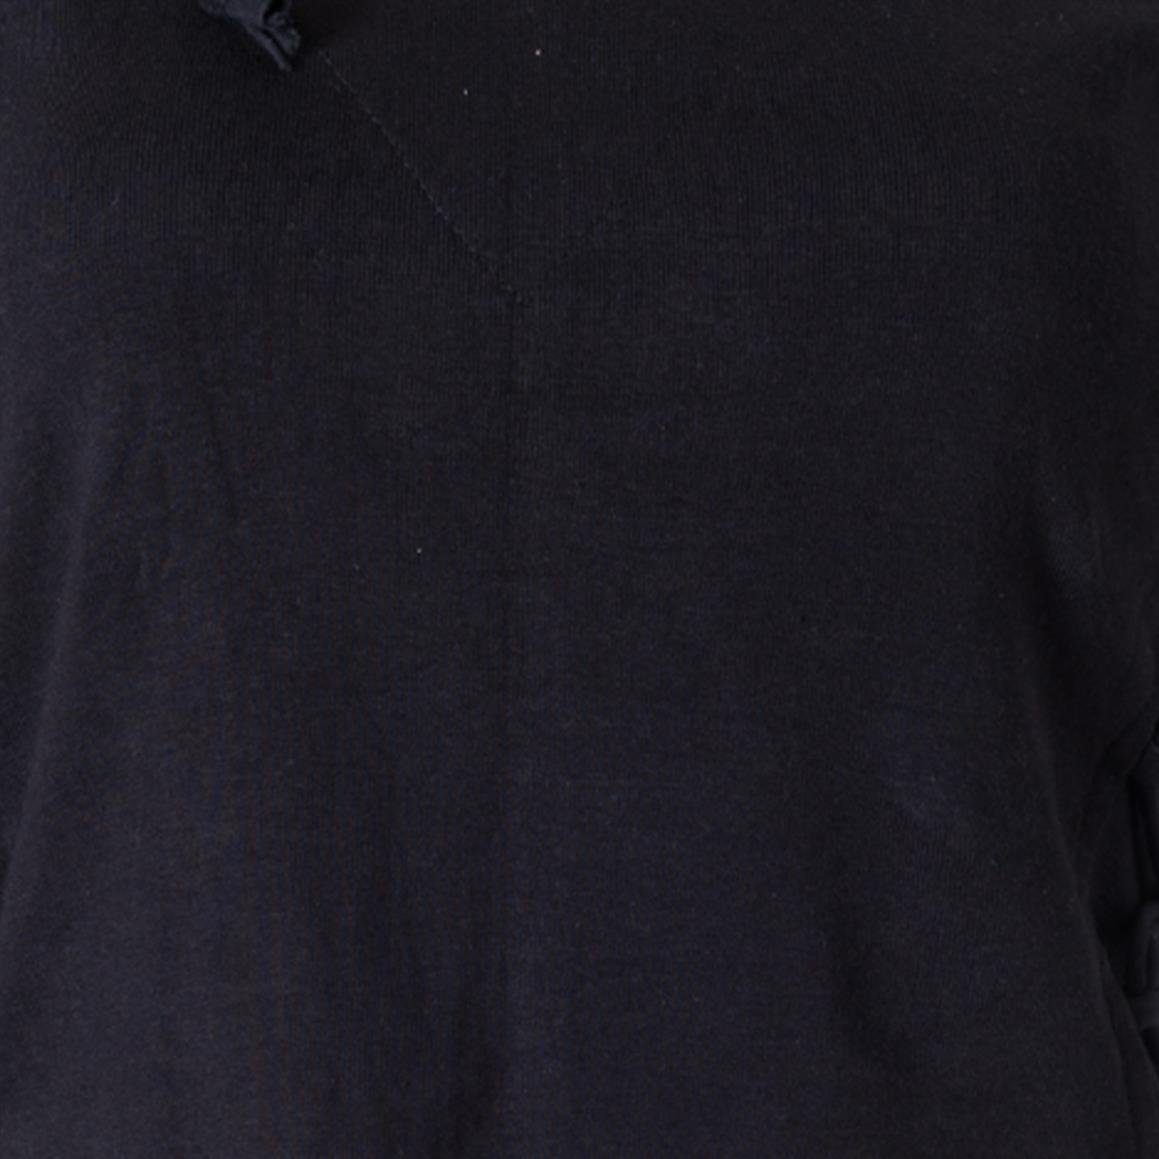 Vishes Kapuzenshirt Elfenshirt Zipfelkapuze und Ethno, Hoody, schwarz zum Gothik Bändern Style Schnüren